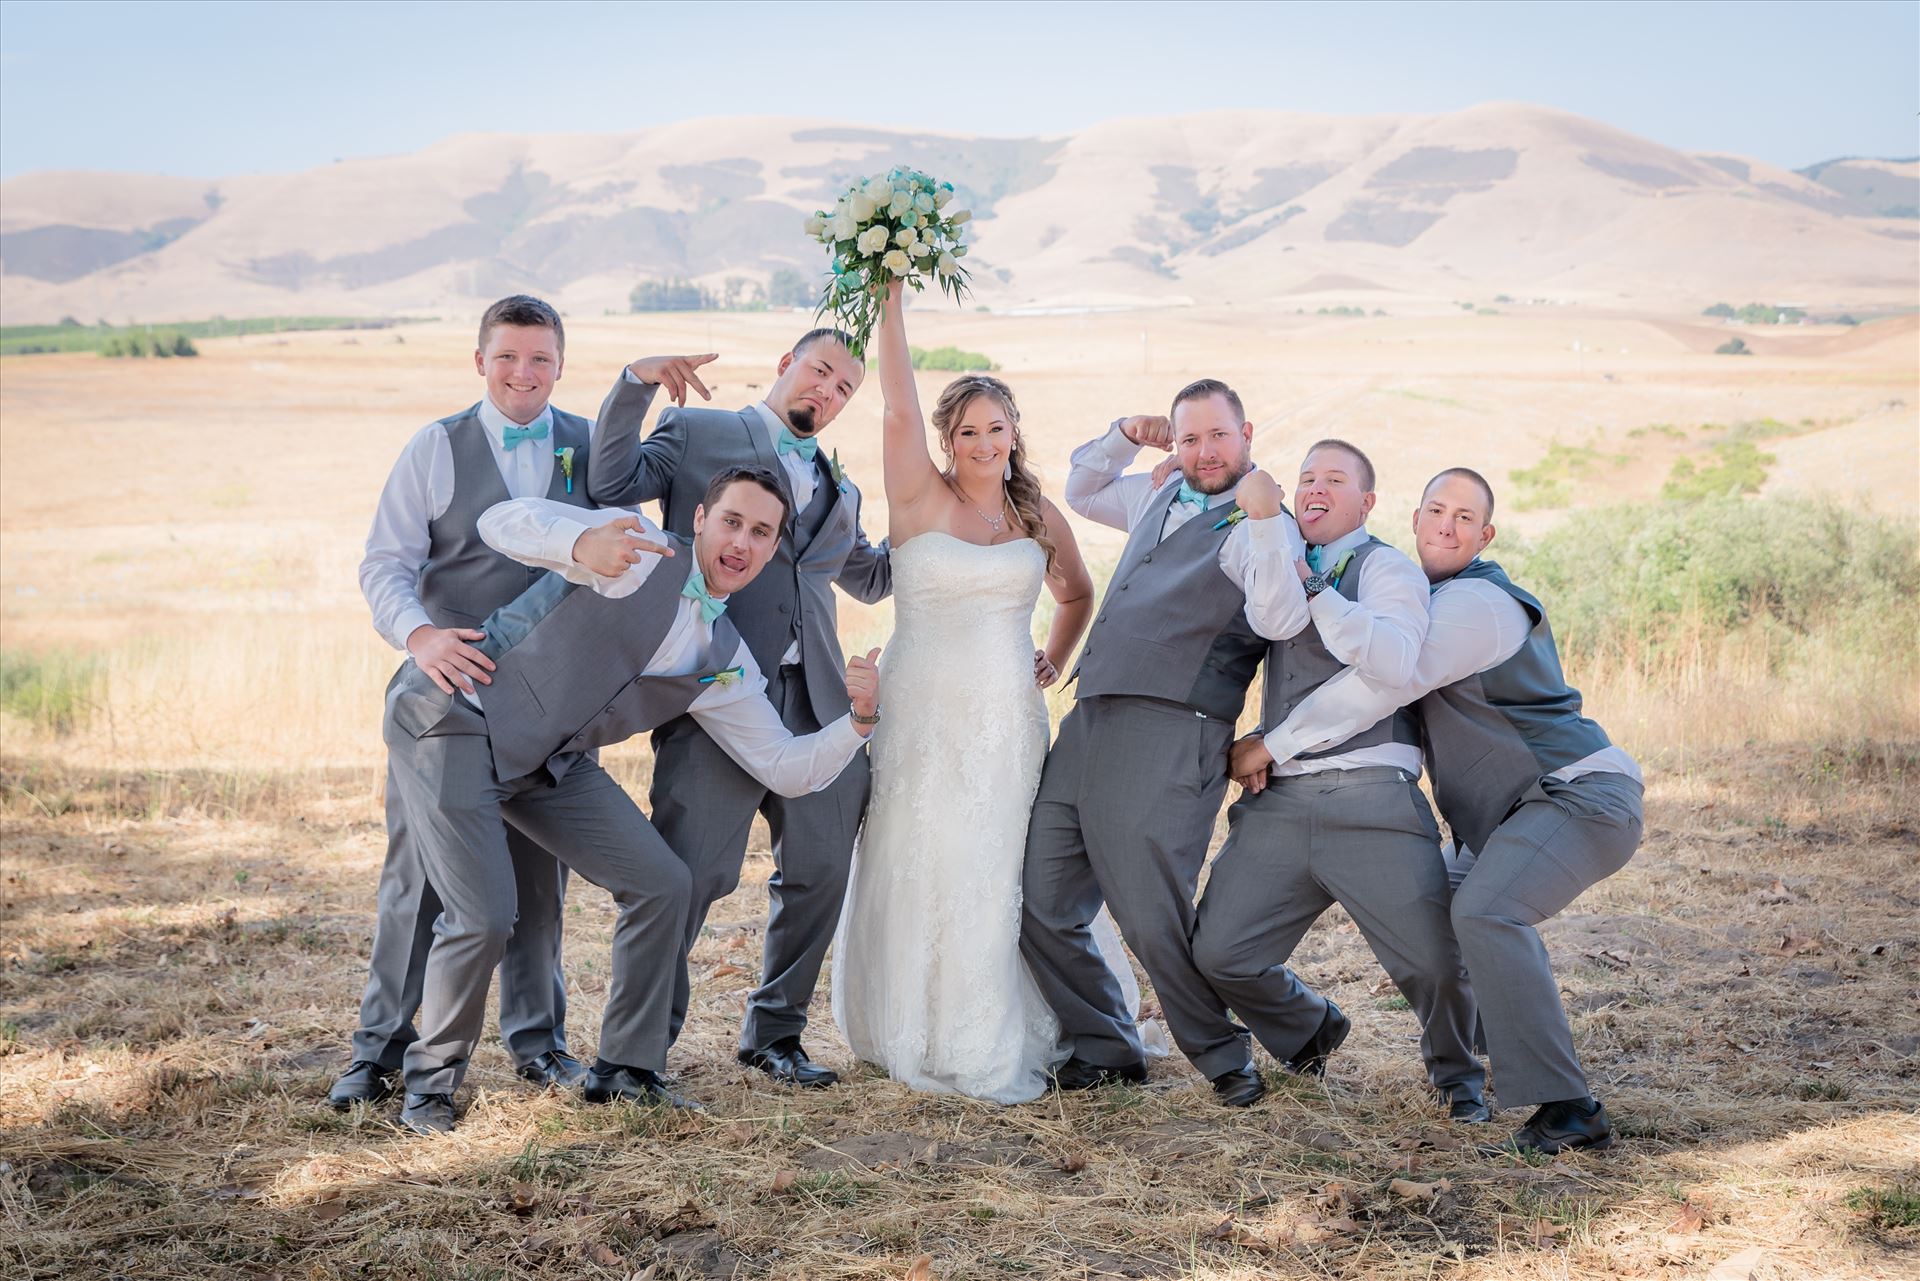 Cherie and Brandon 069 Mirror's Edge Photography, a San Luis Obispo Wedding Photographer, captures a wedding at the Historic Dana Adobe in Nipomo California.  Fun bride and groomsmen. by Sarah Williams